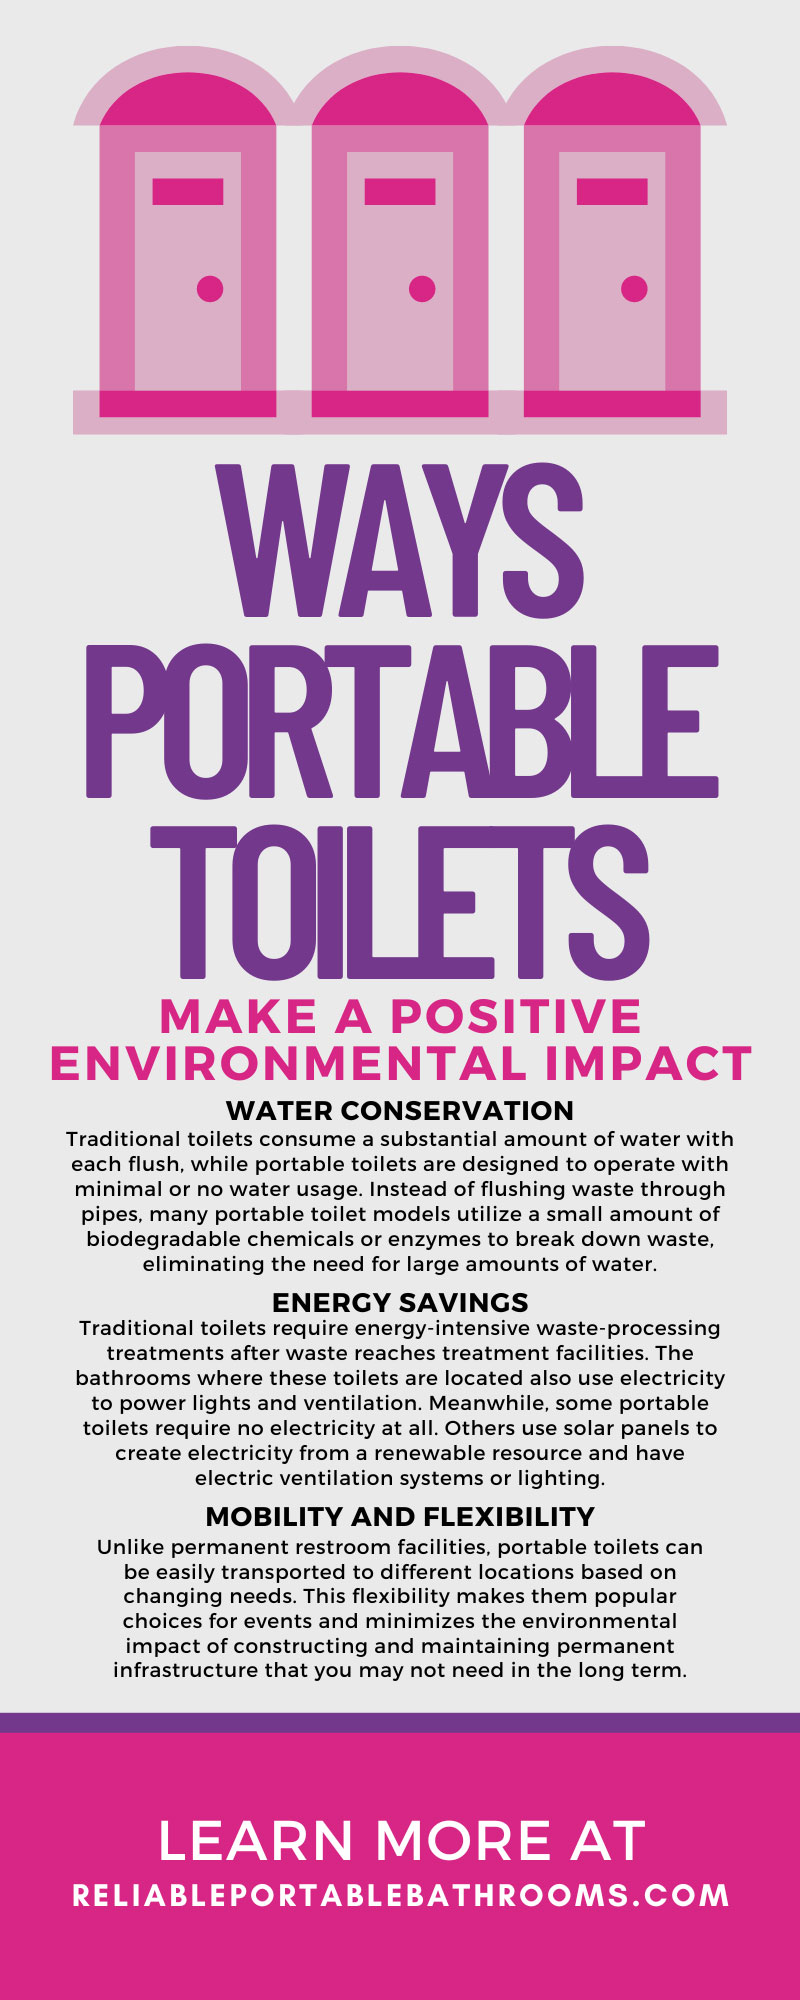 8 Ways Portable Toilets Make a Positive Environmental Impact